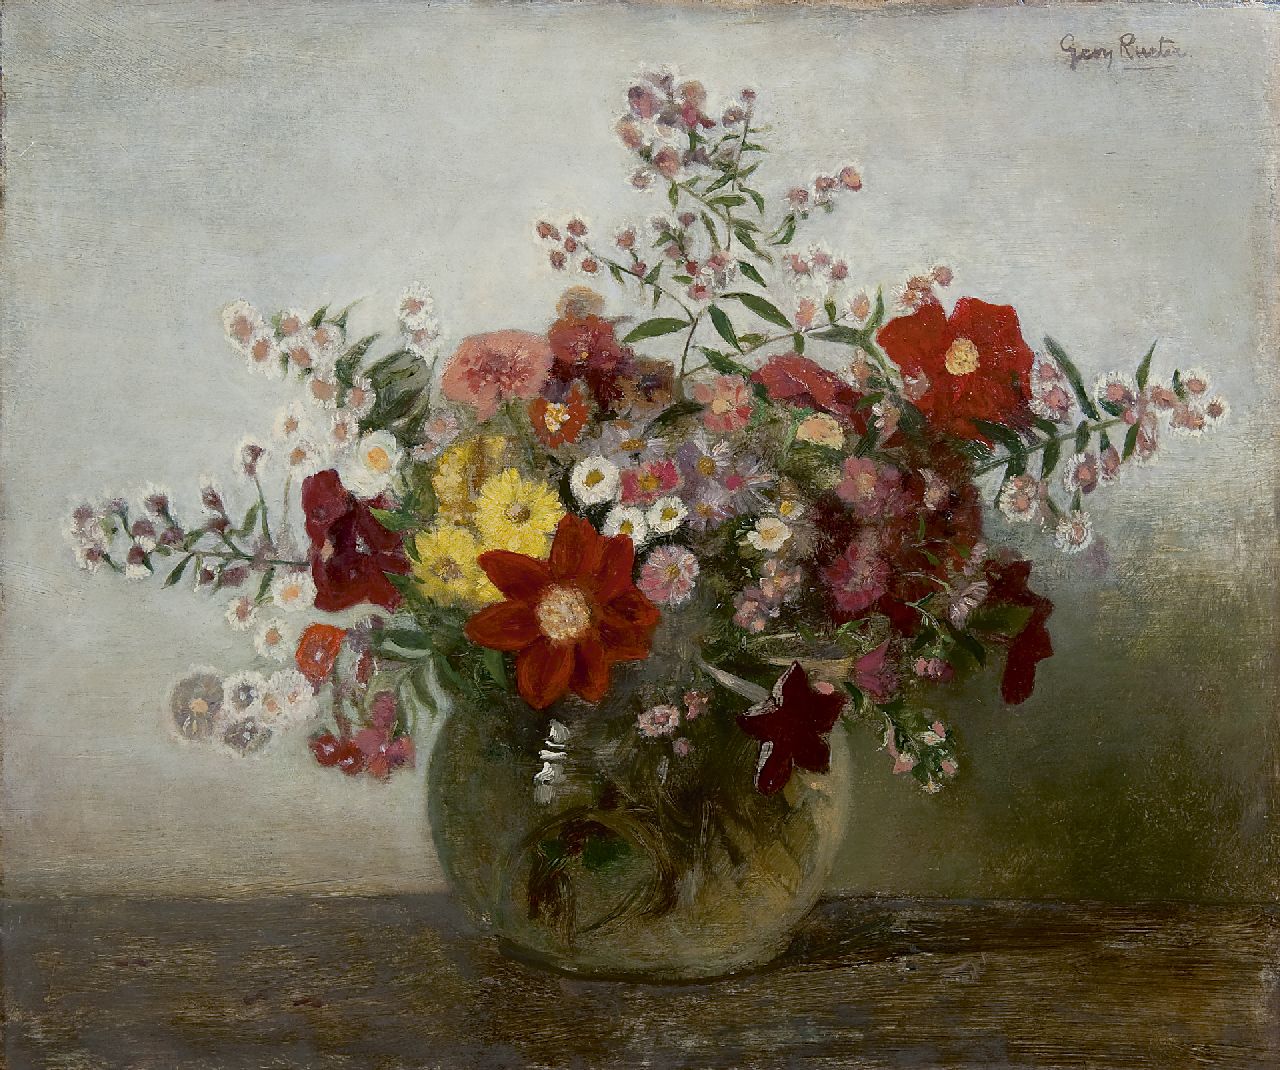 Rueter W.C.G.  | Wilhelm Christian 'Georg' Rueter, Flowers in a glass vase, oil on panel 43.8 x 51.2 cm, signed u.r.